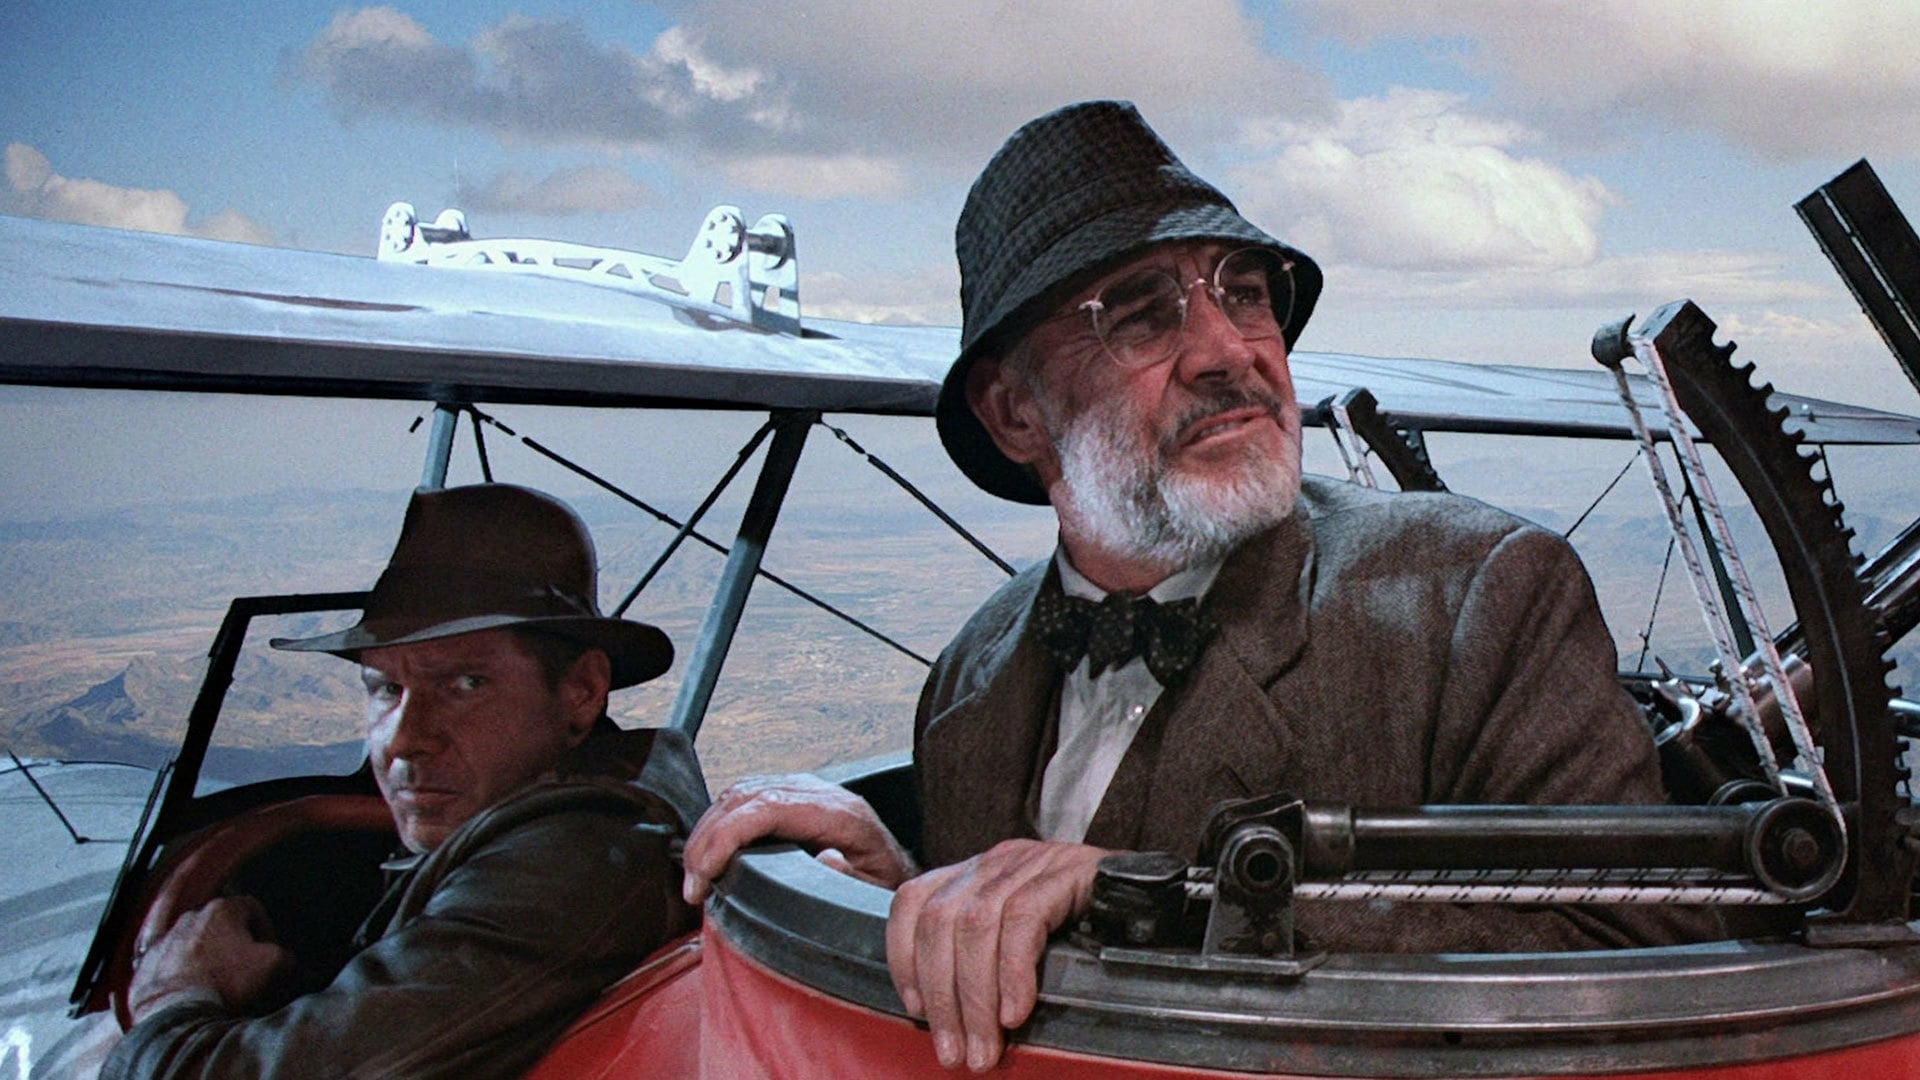 Image du film Indiana Jones et la Dernière Croisade 4waxf28obxu6azfragtc7rjhgmtjpg